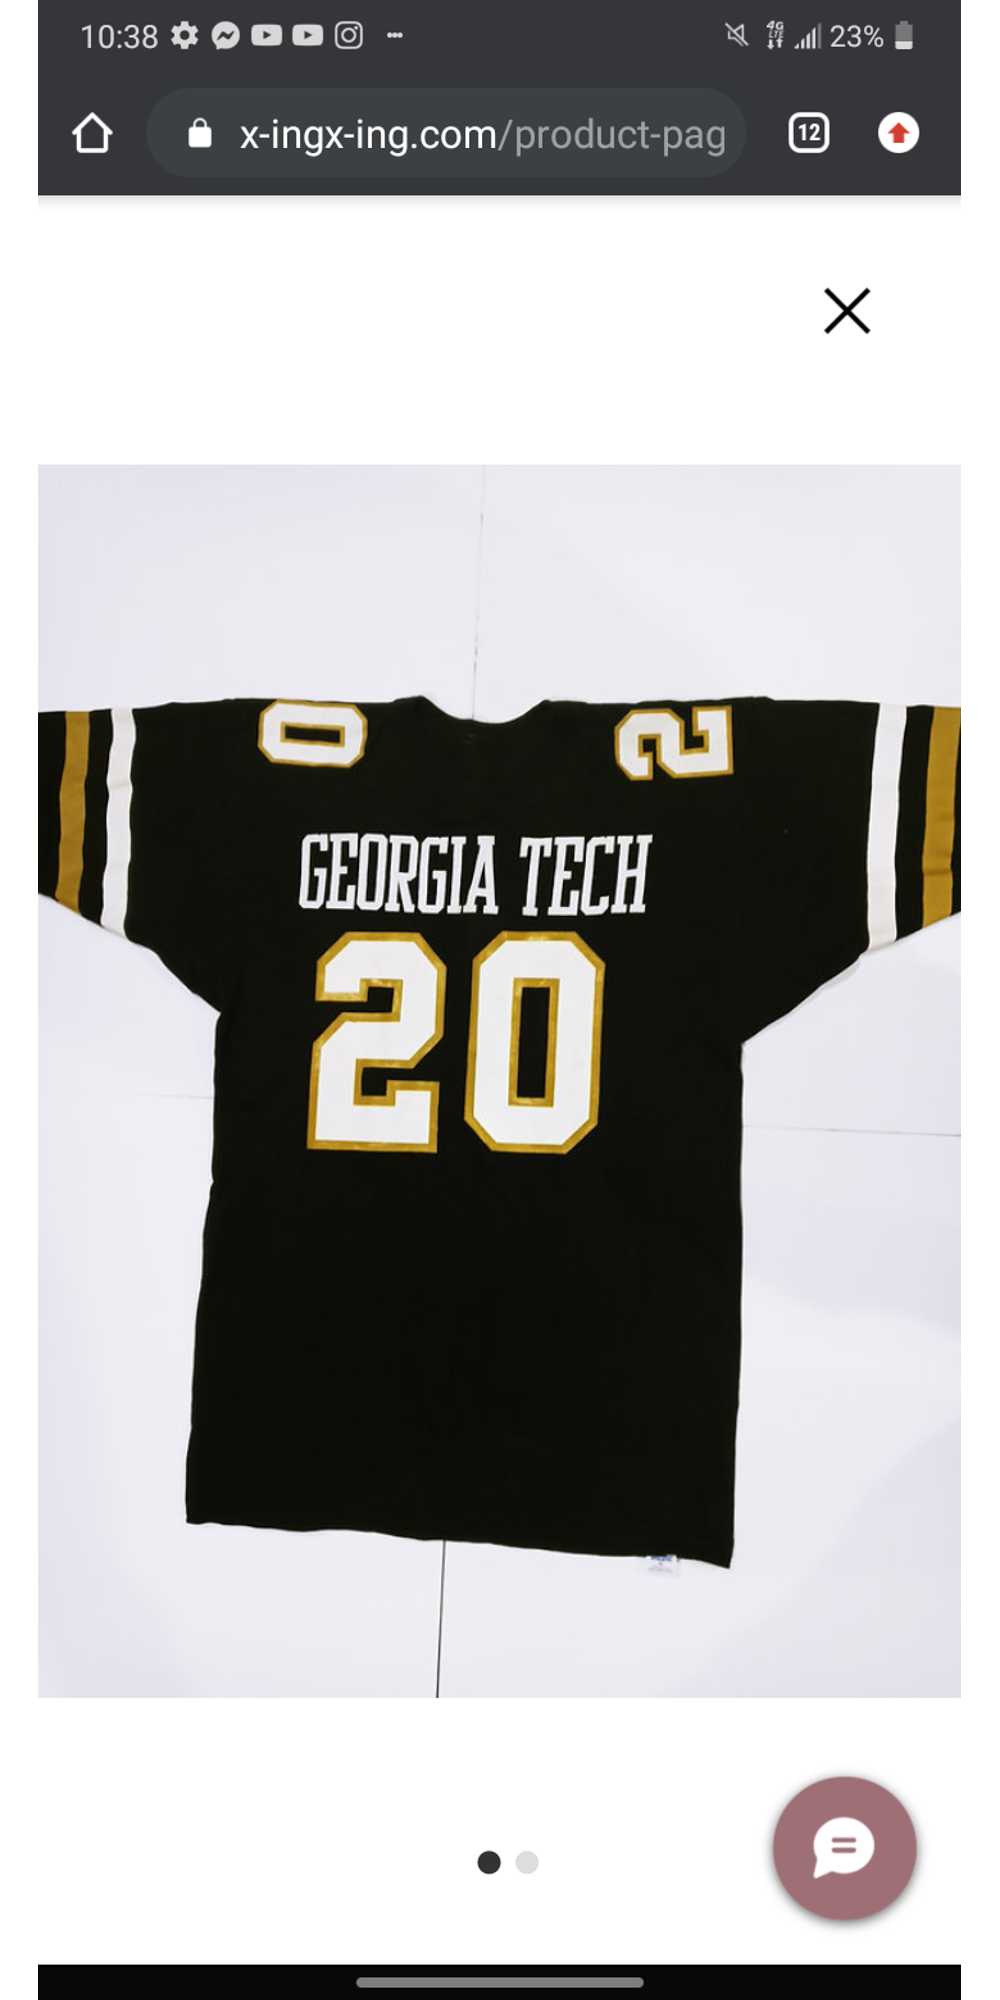 Georgia Tech old school cloth jersey - image 1